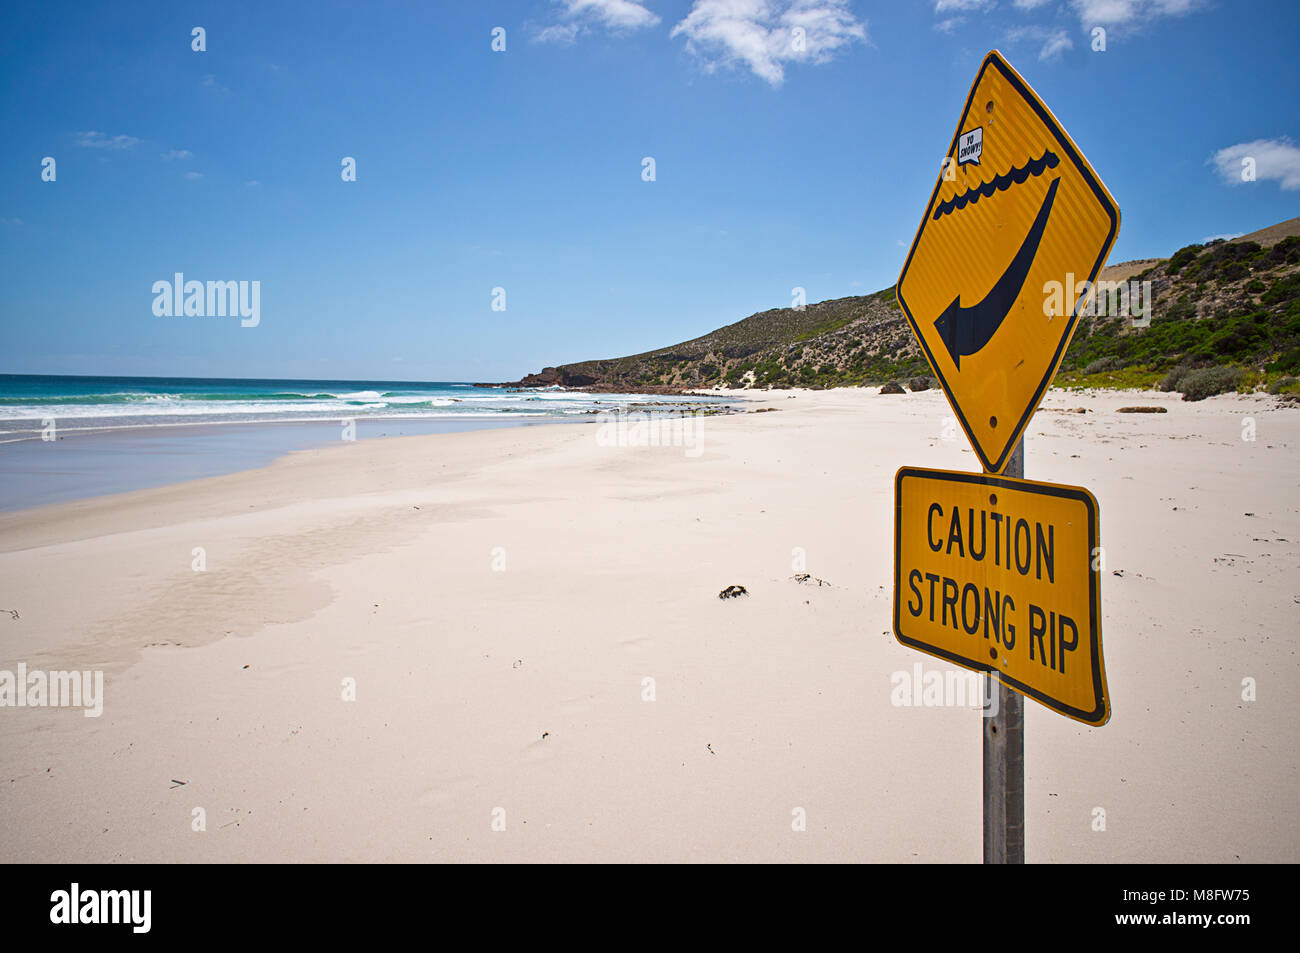 Dangerous Rip Warning Sign, Snelling Beach, Kangaroo Island, South Australia Stock Photo